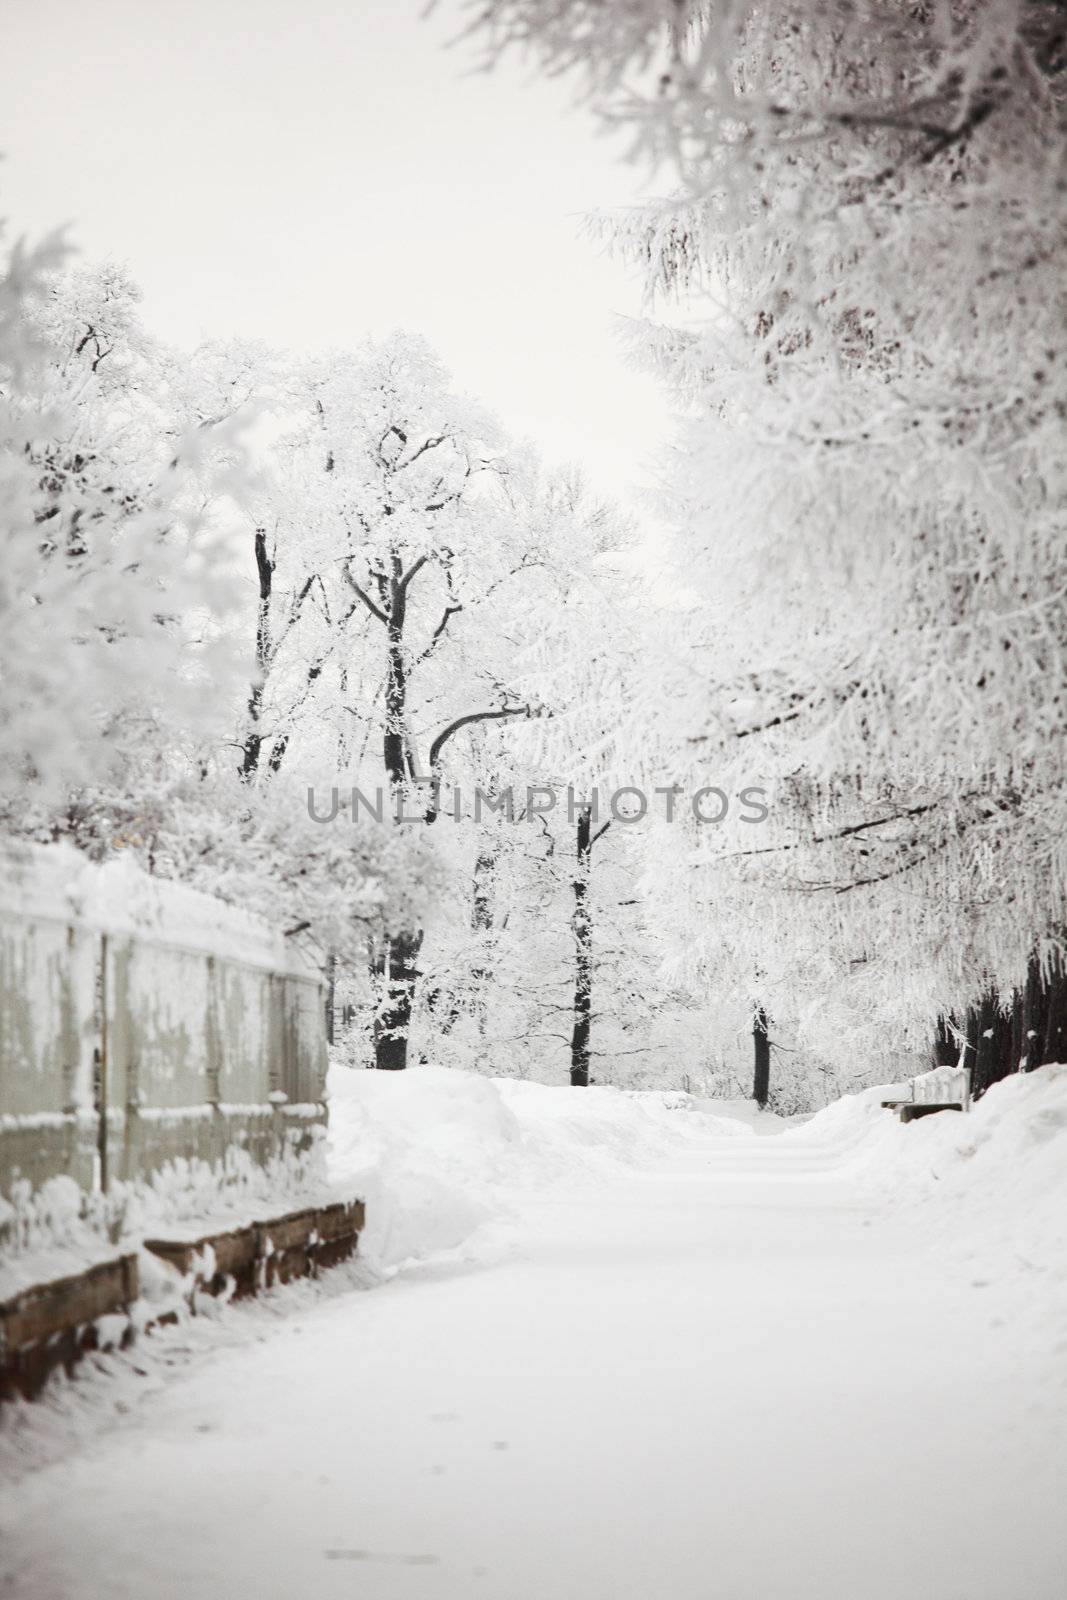  winter trees on snow white background